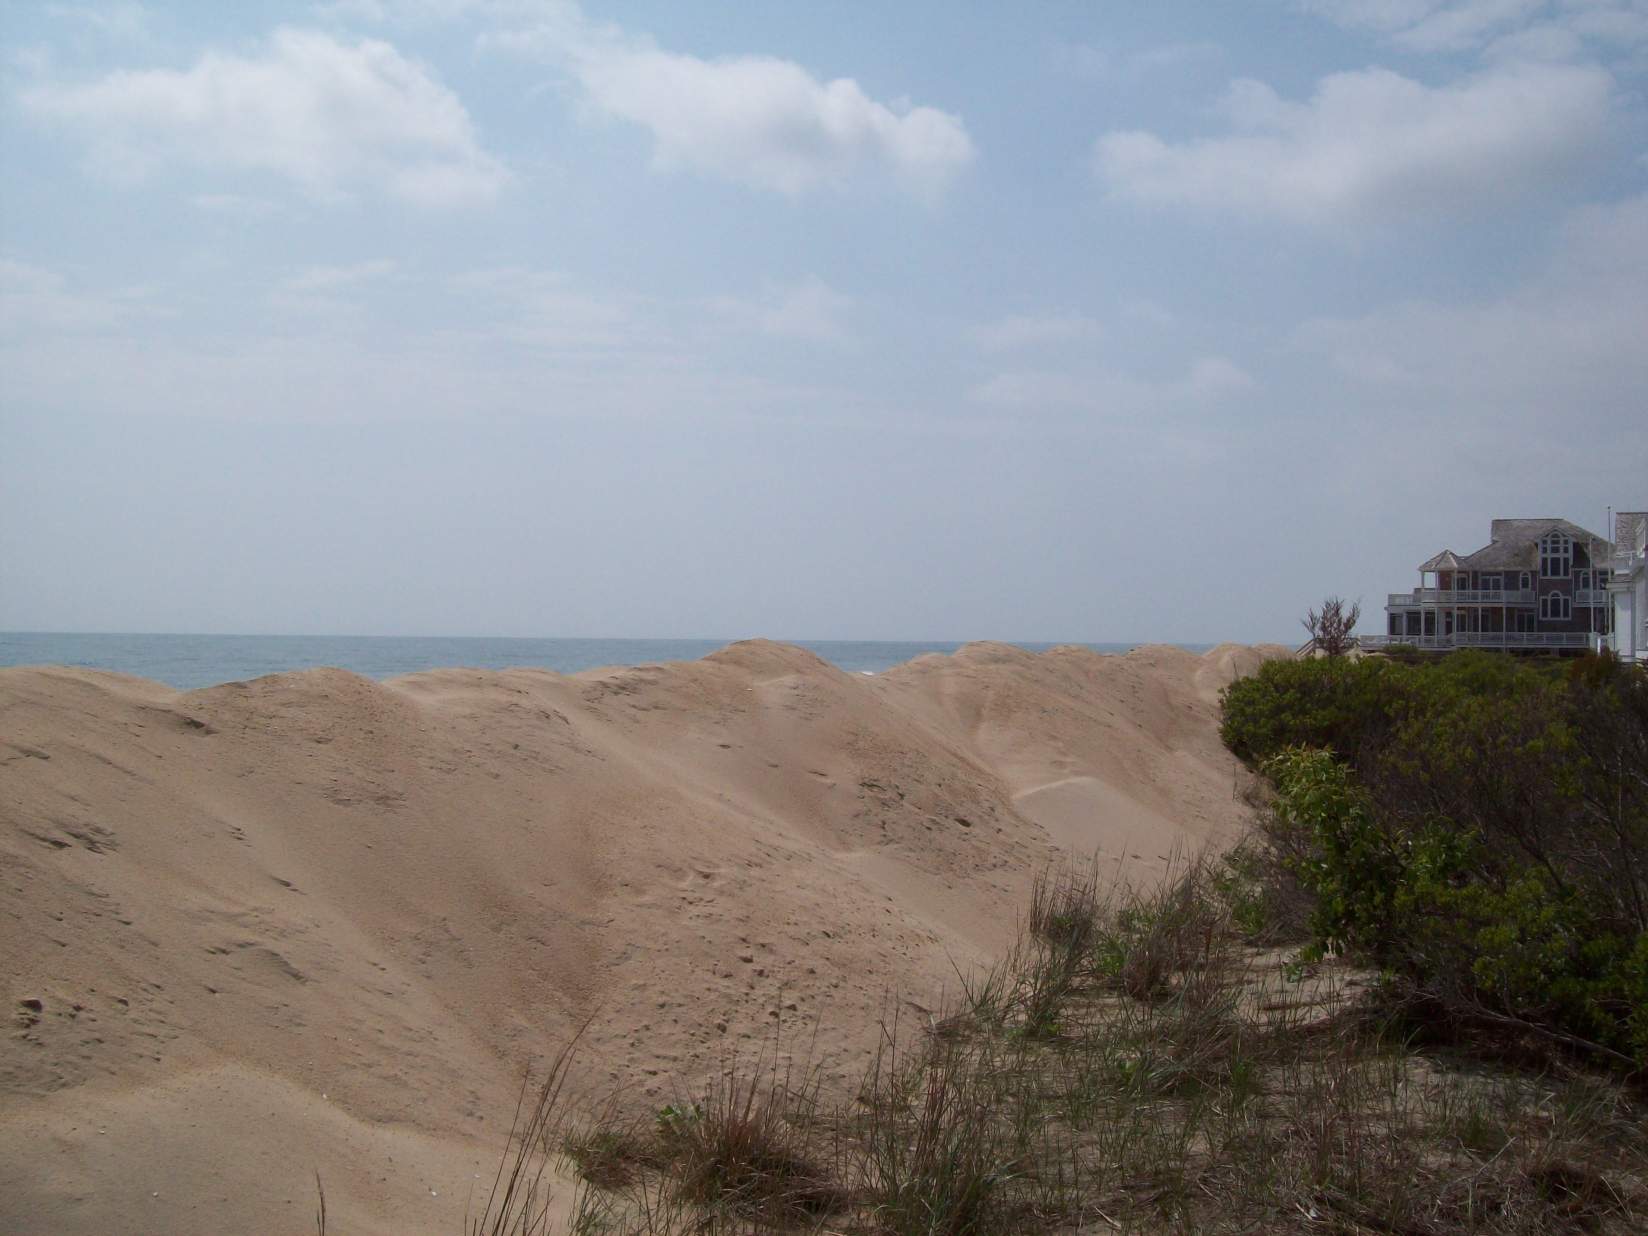 The Preserve dune restoration